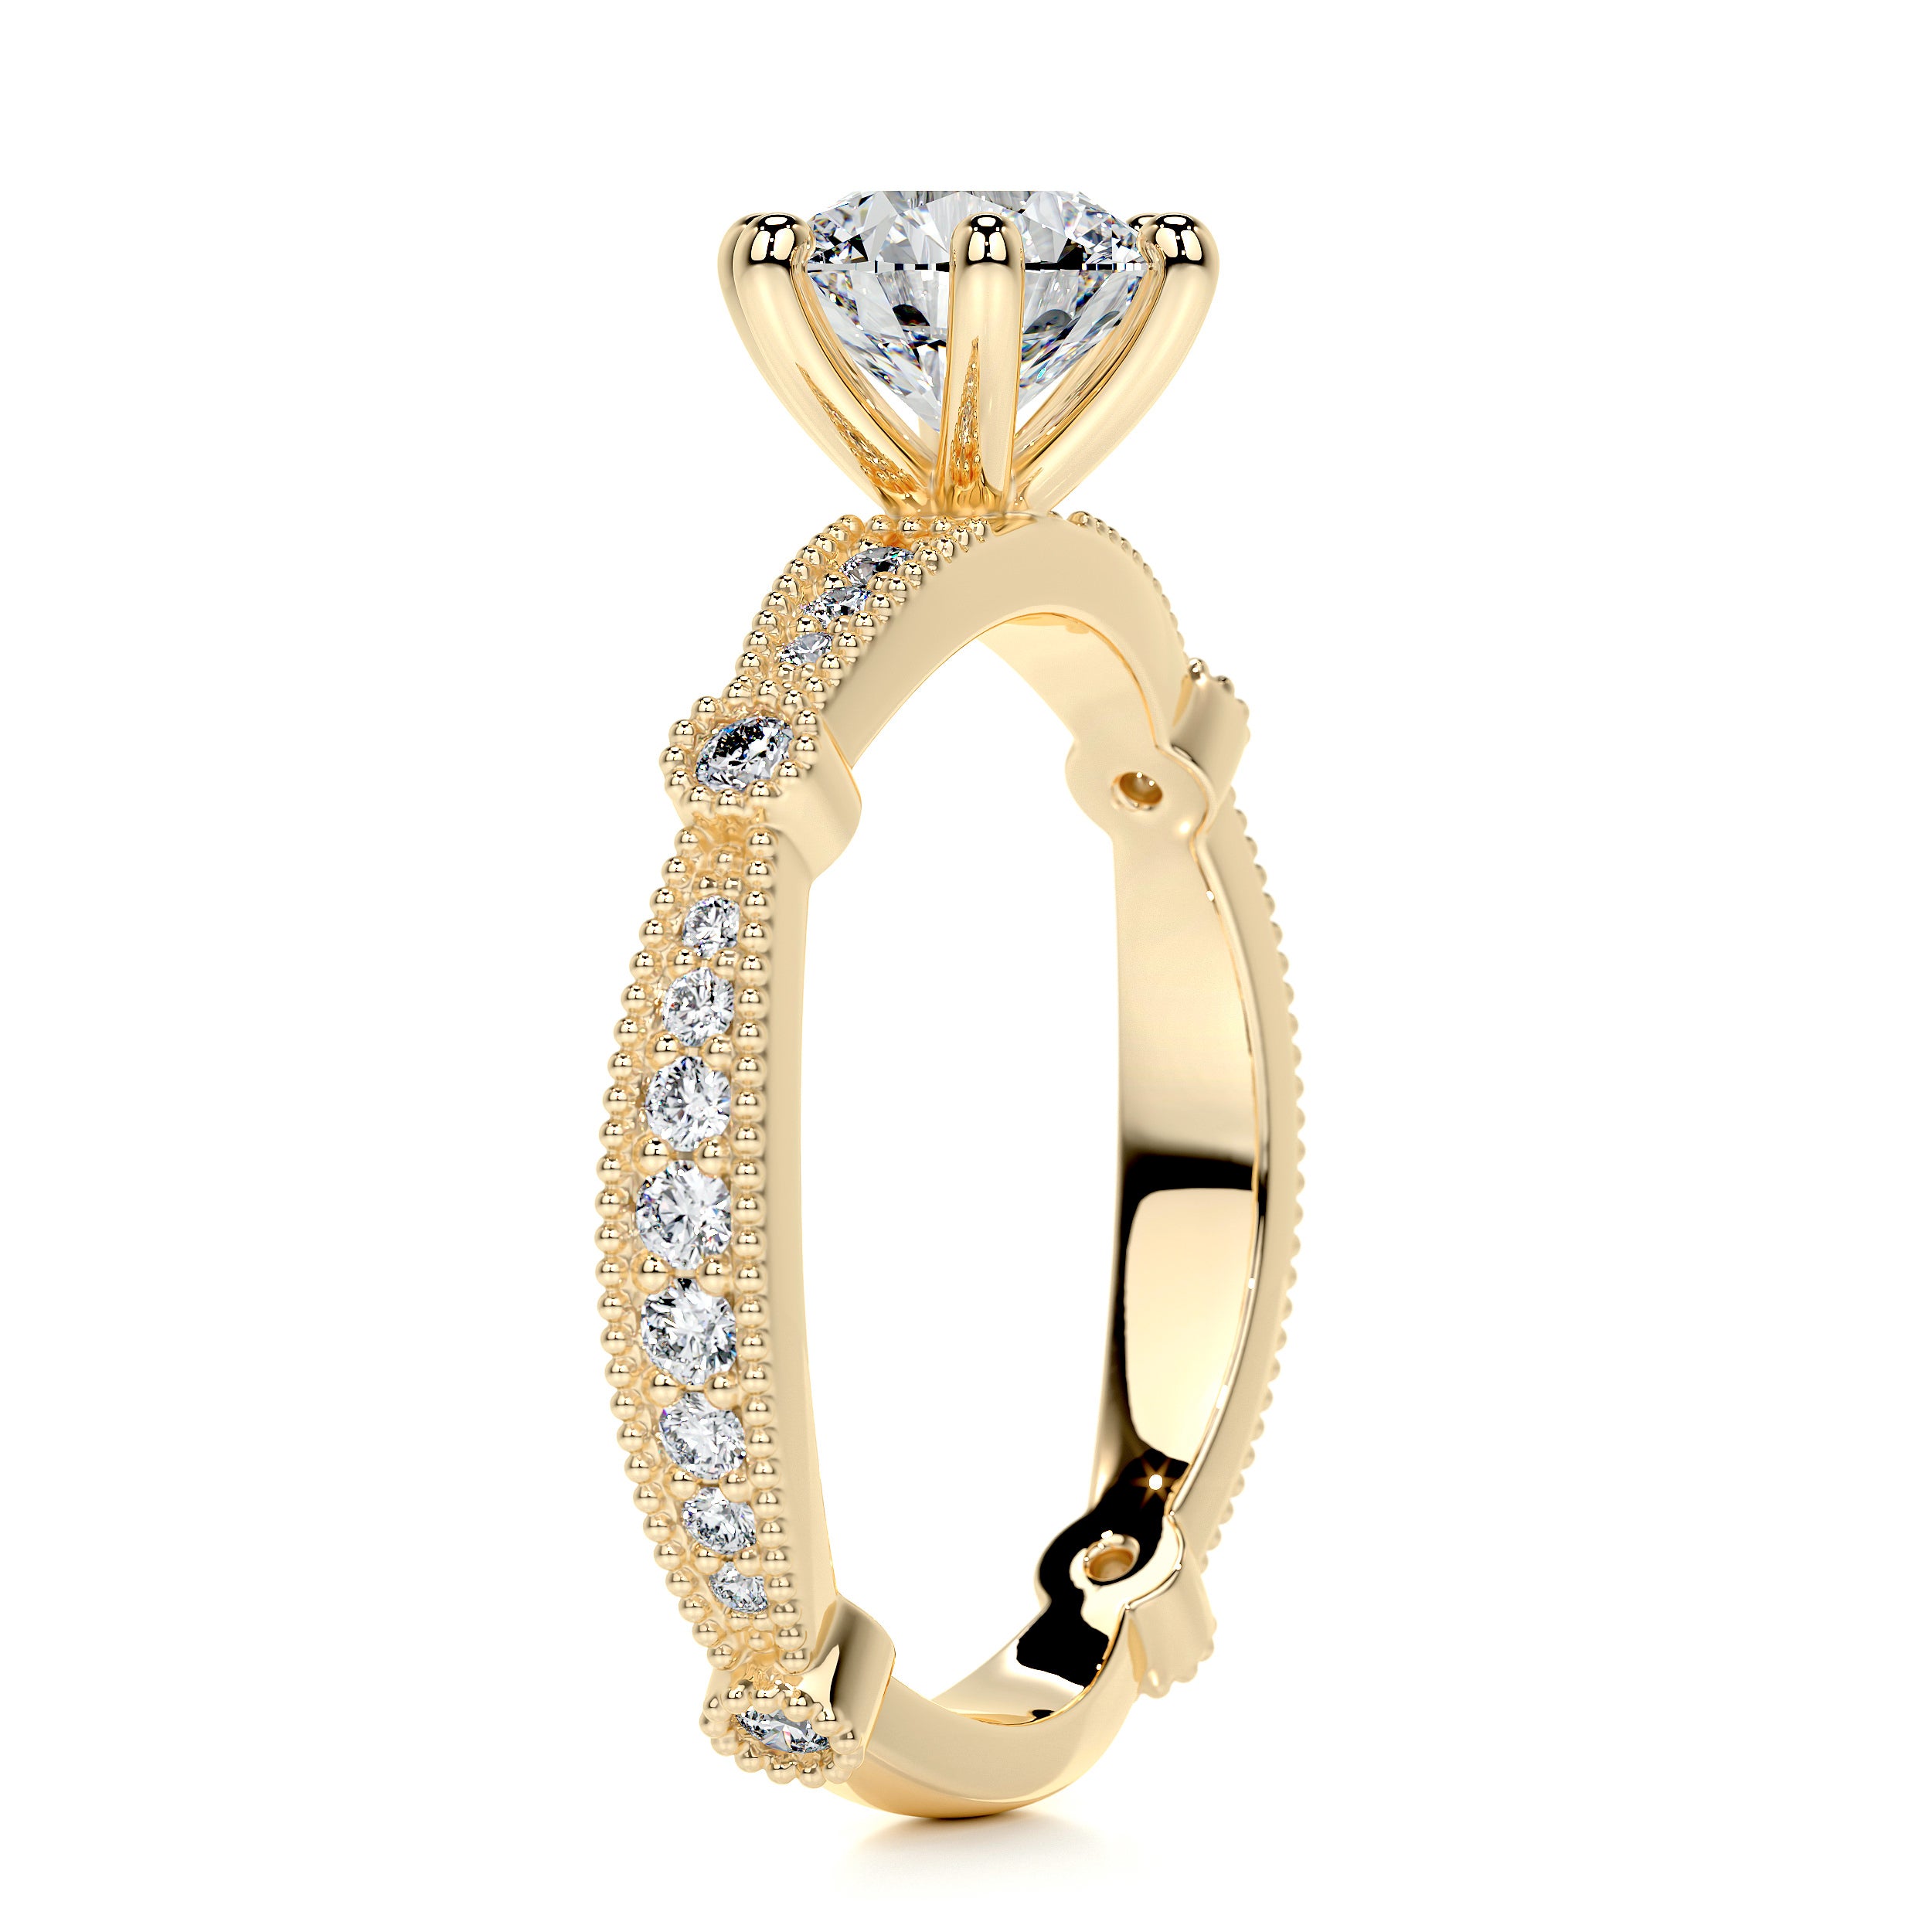 Stacy Moissanite & Diamonds Ring   (1.30 Carat) -18K Yellow Gold